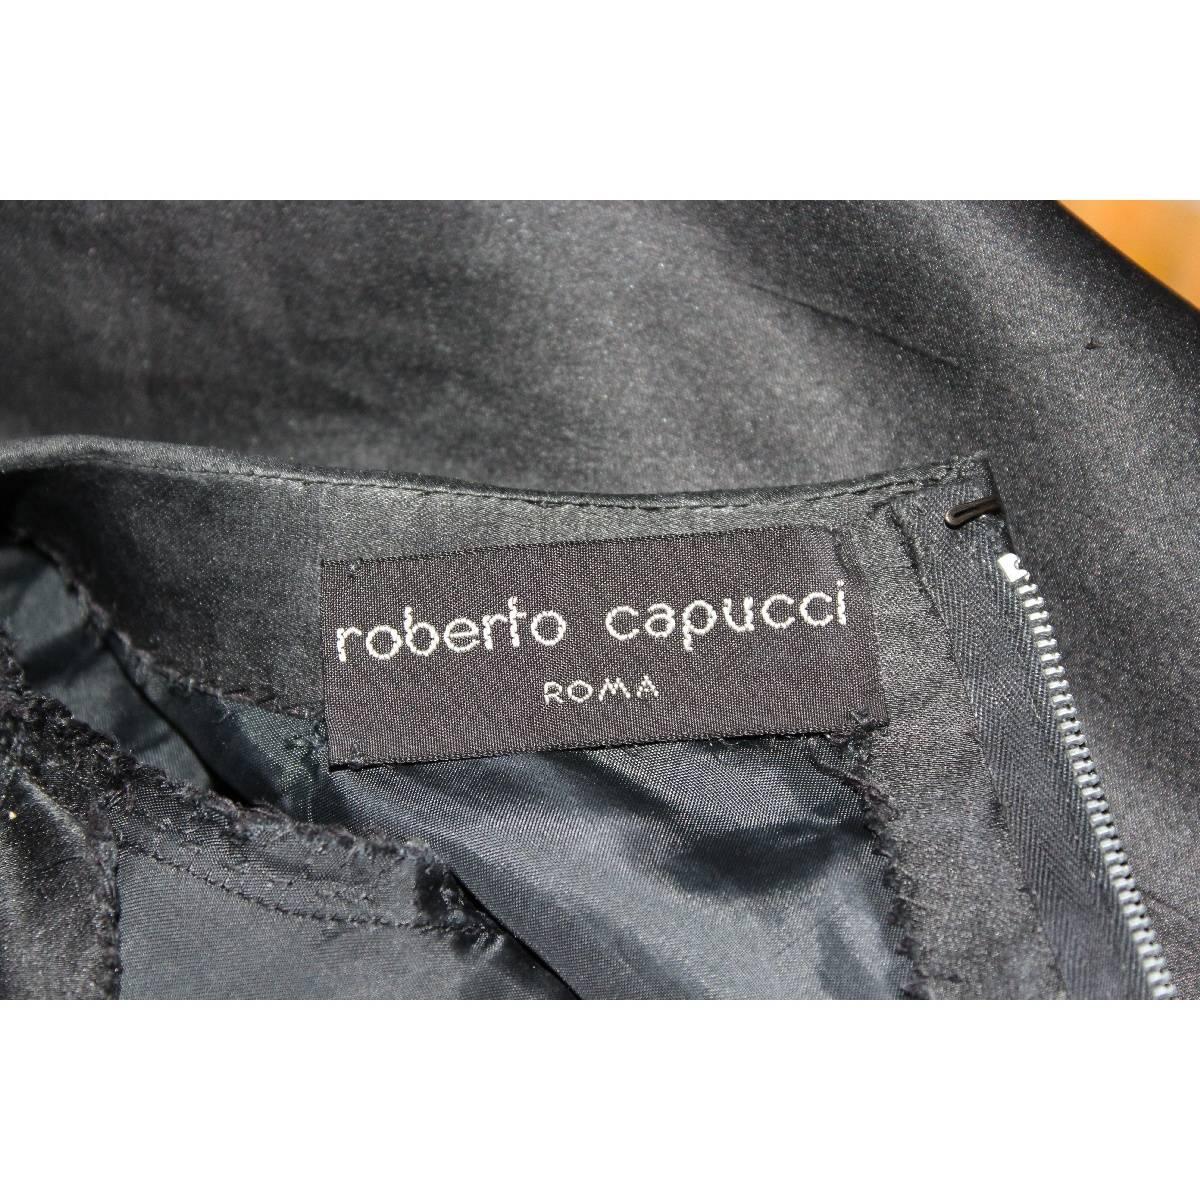 Capucci Roberto vintage black fuchsia silk draping dress size 42 it 1980s 1